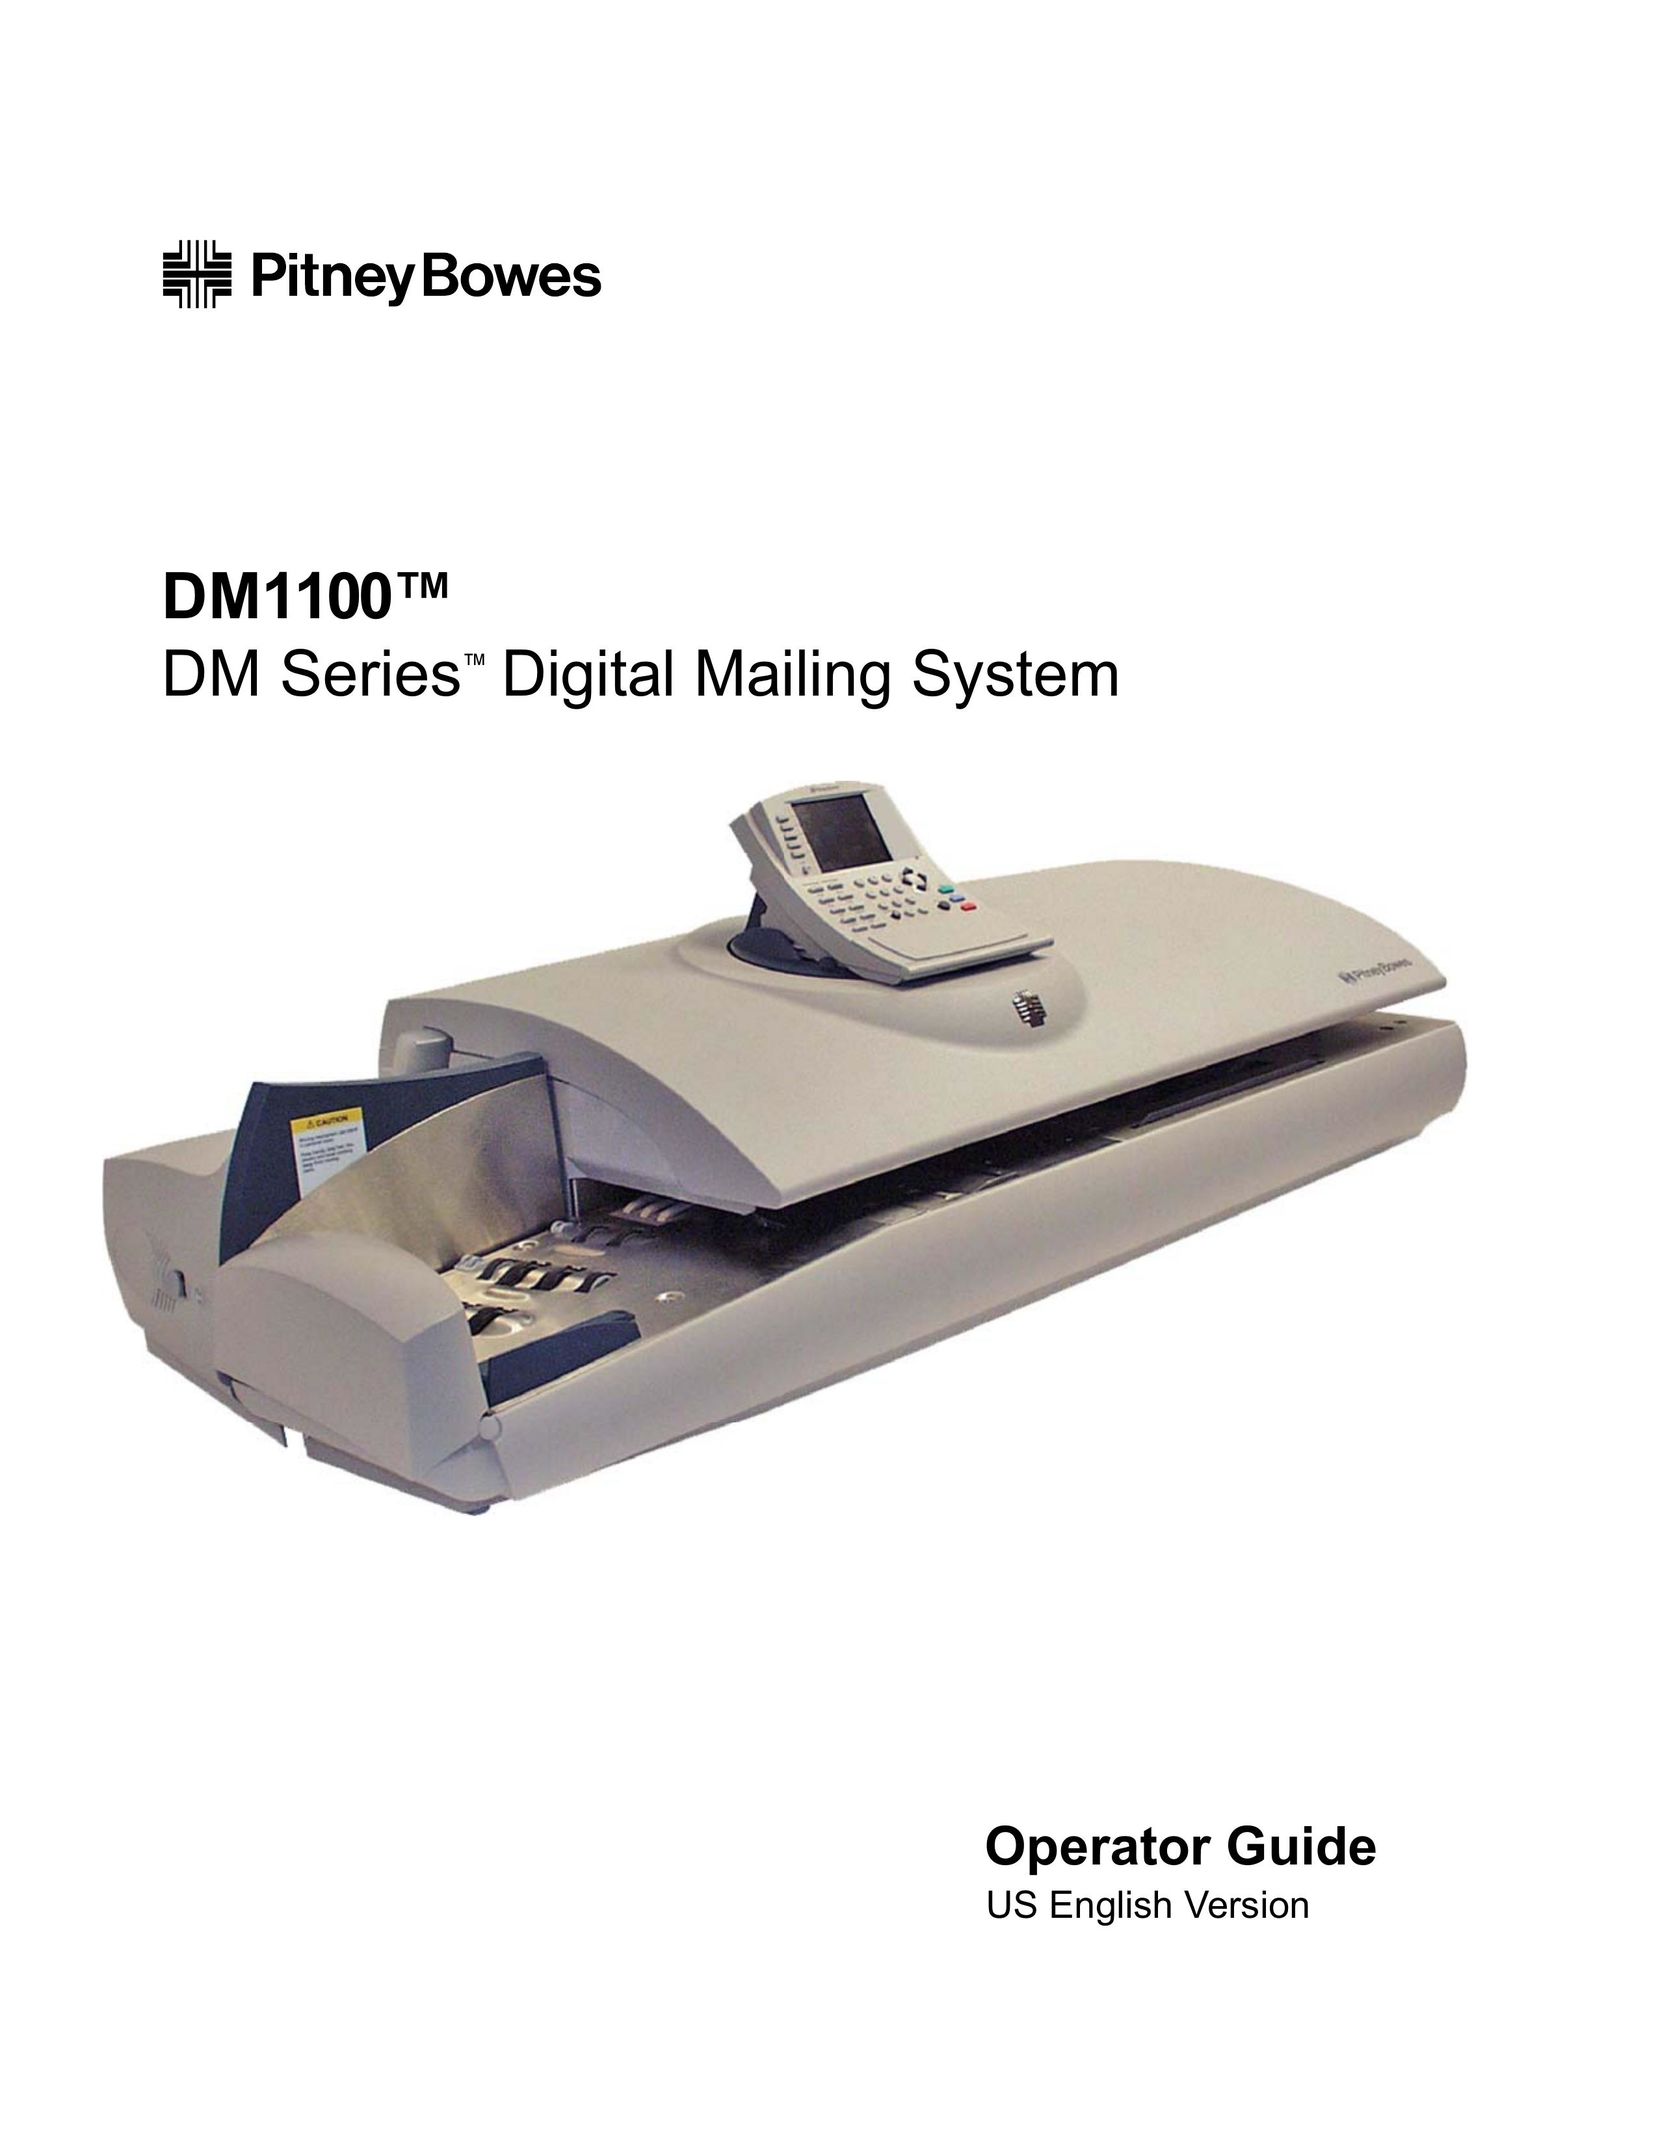 Pitney Bowes DM1100 Postal Equipment User Manual